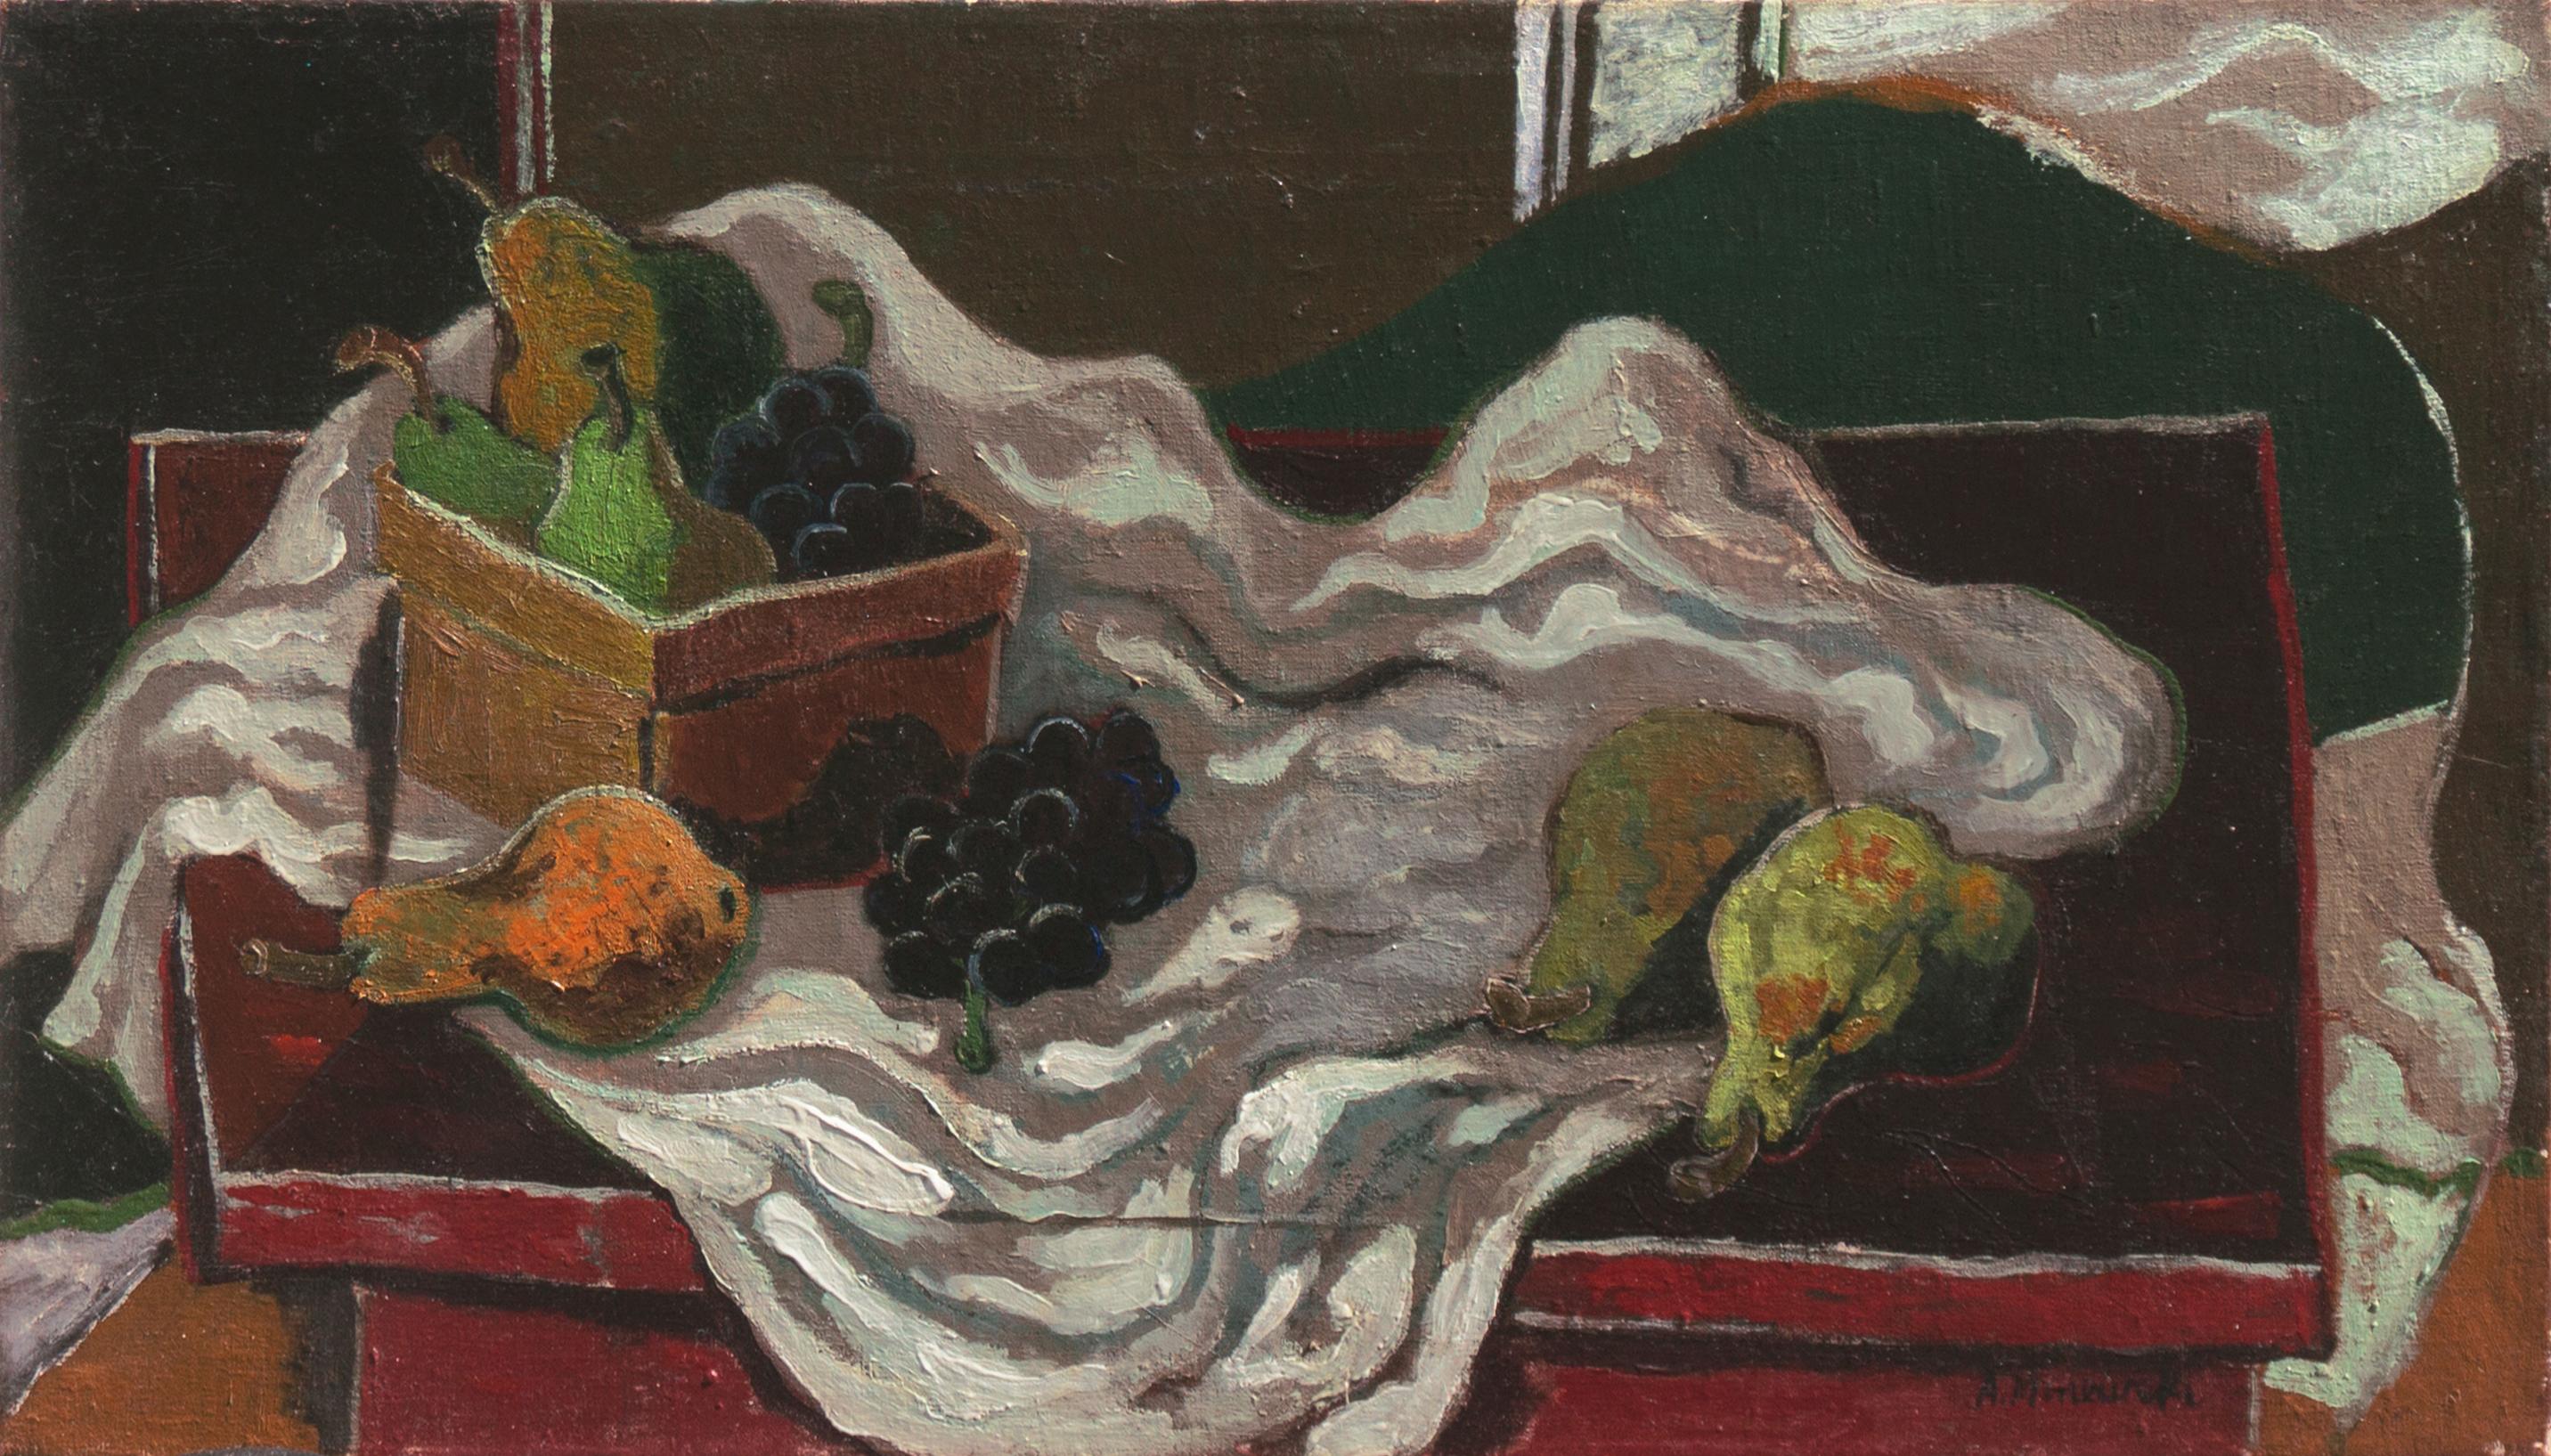 Still-Life Painting Alex Minewski - Nature morte aux fruits, Grande Chaumière, Hans Hofmann, NY ASL, Monhegan, PAFA